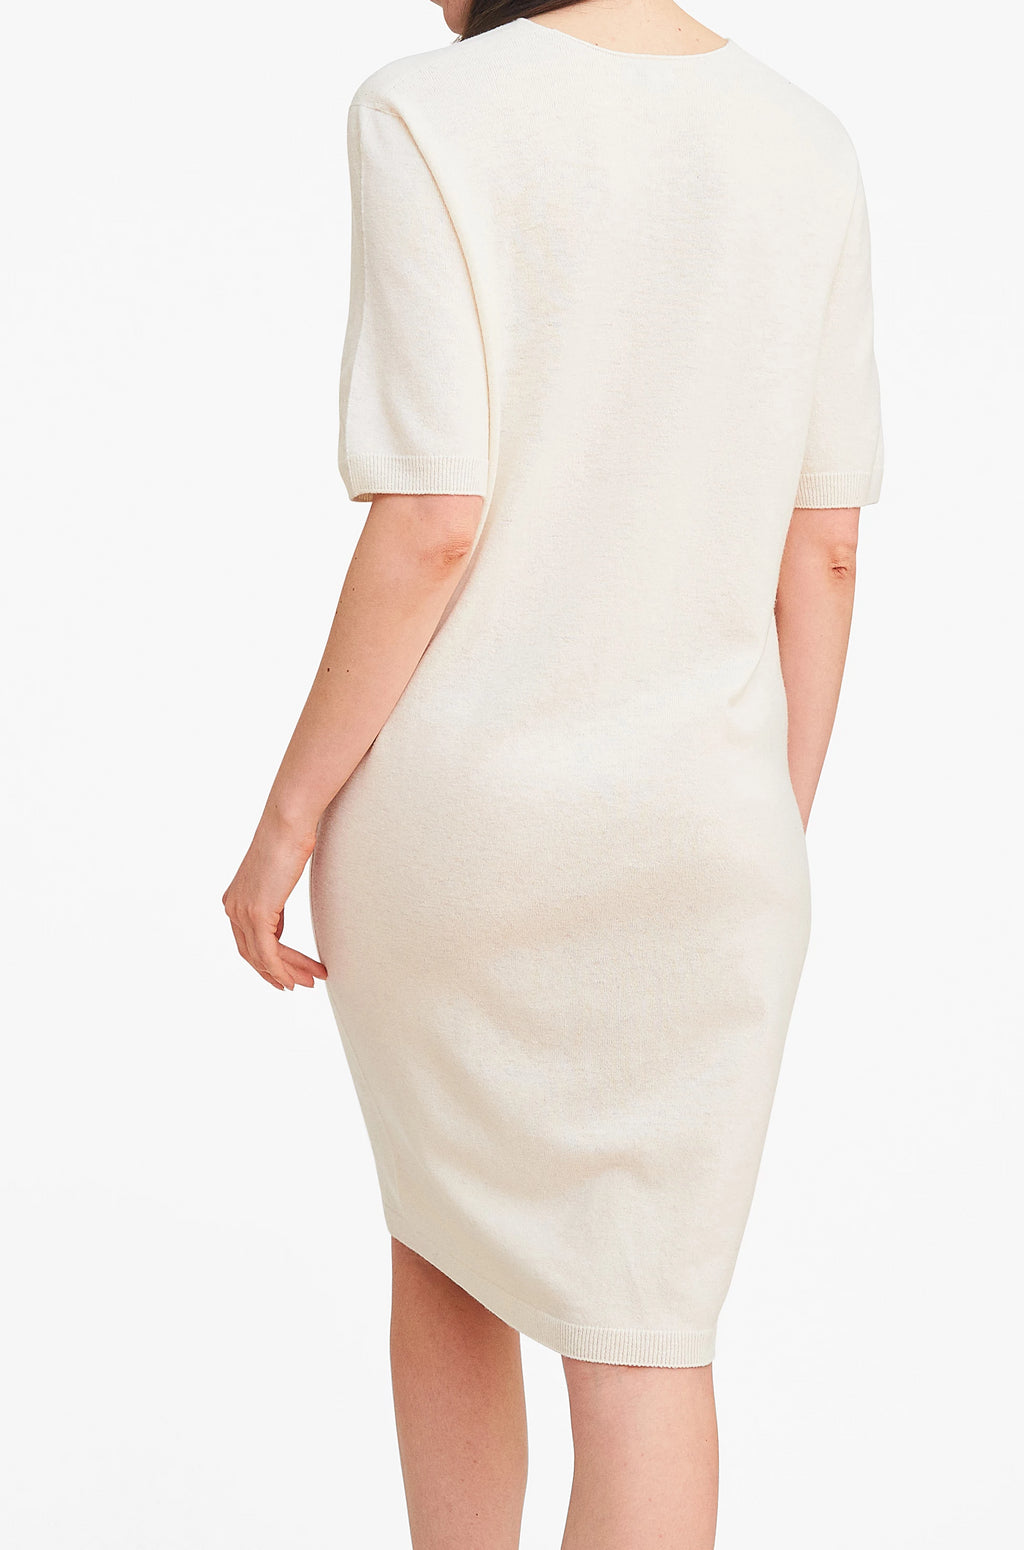 Simply Classy Sweater Dress - Ivory